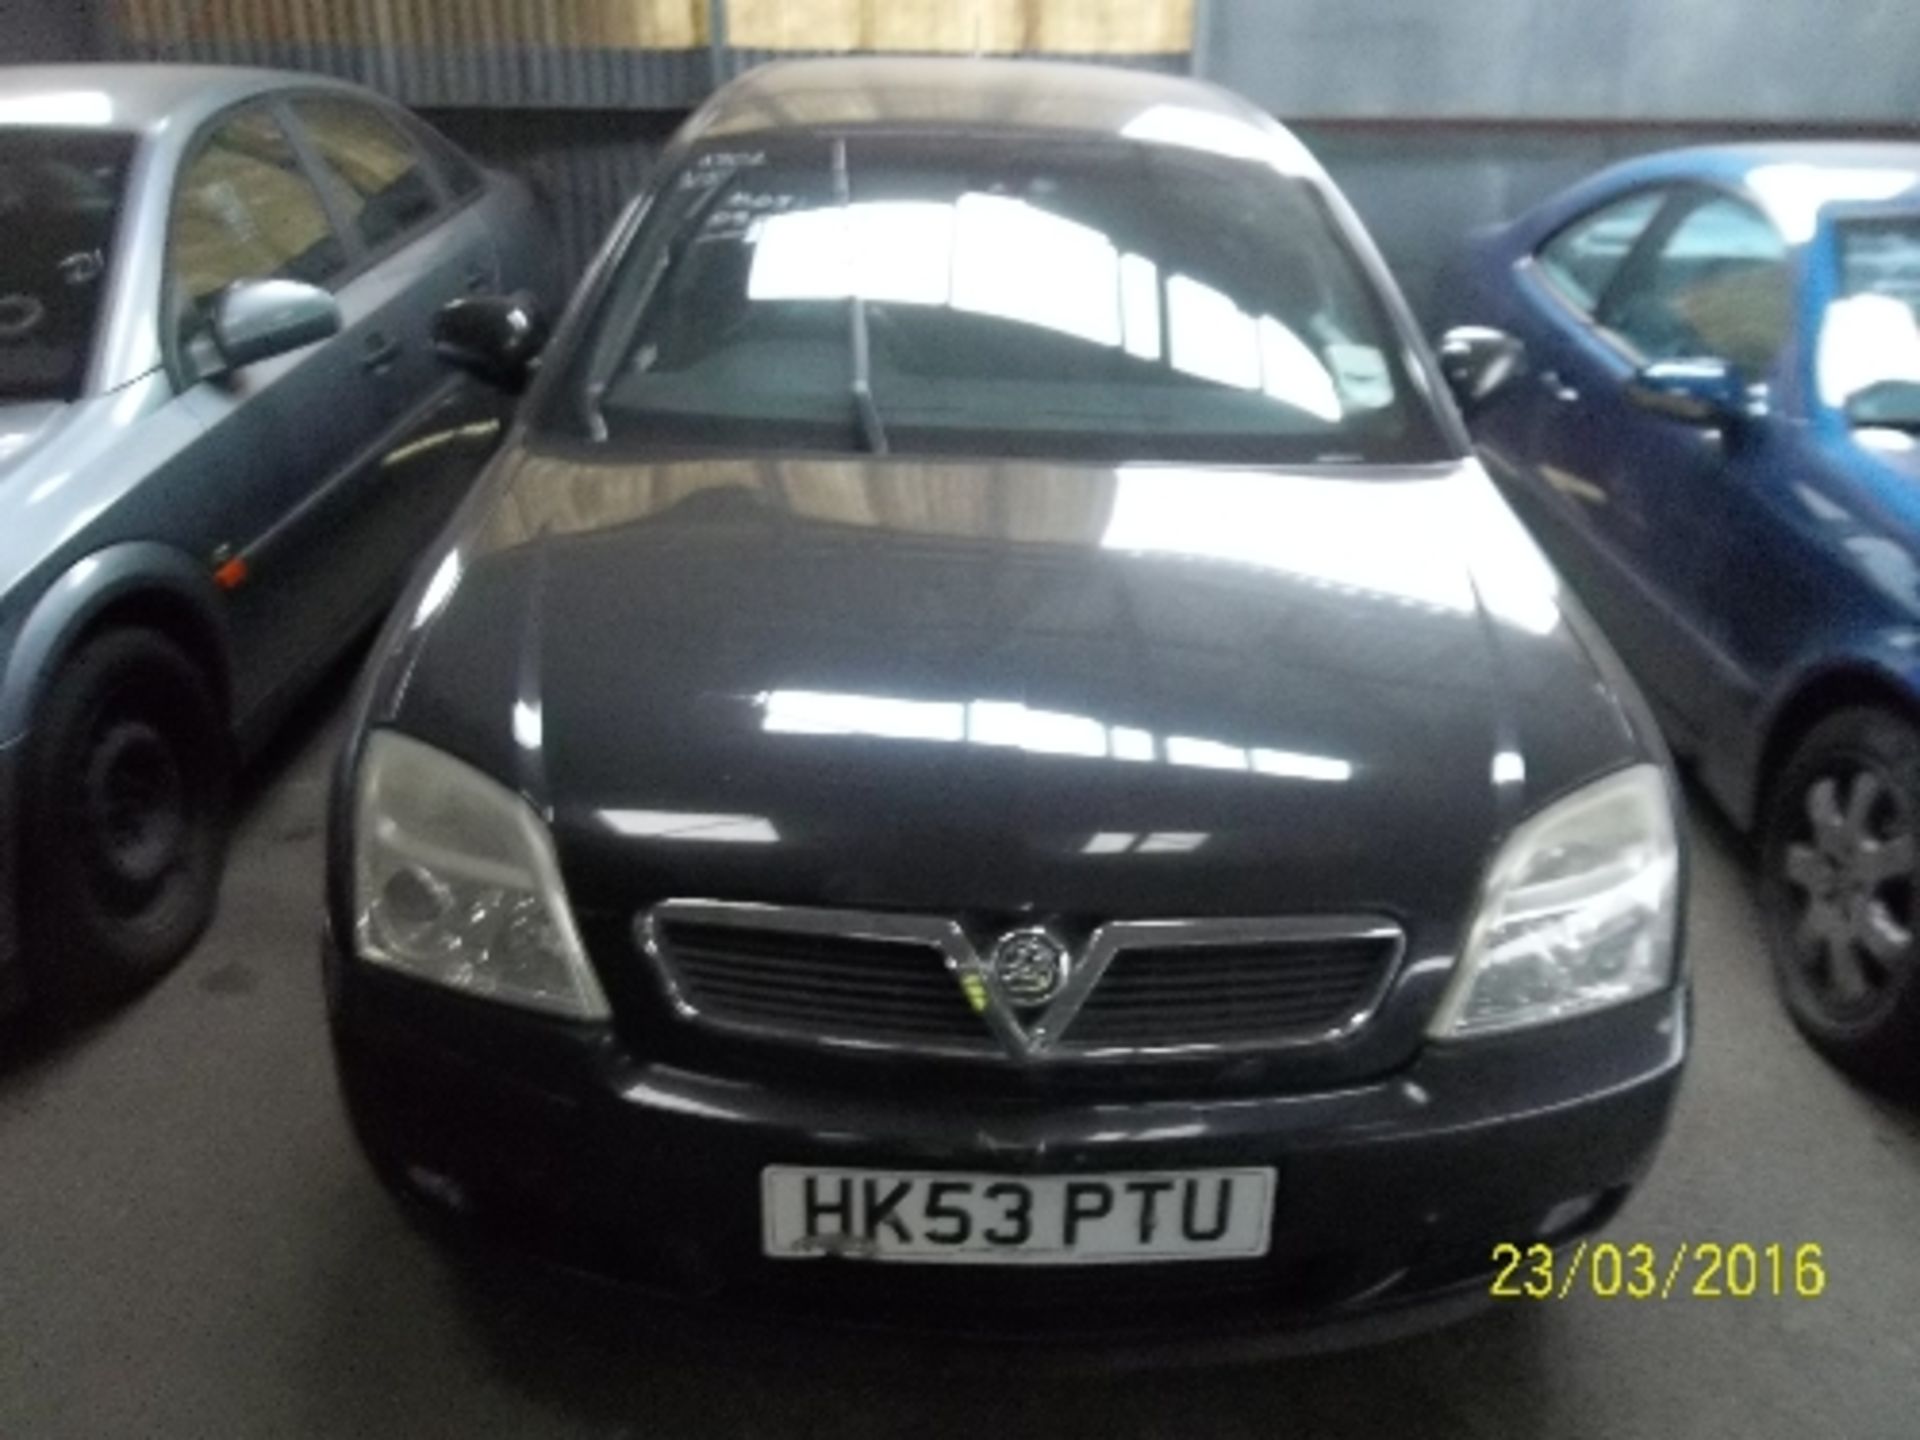 Vauxhall Vectra SXI T Estate - HK53 PTU Date of registration: 01.01.2004 1998cc, petrol, manual,